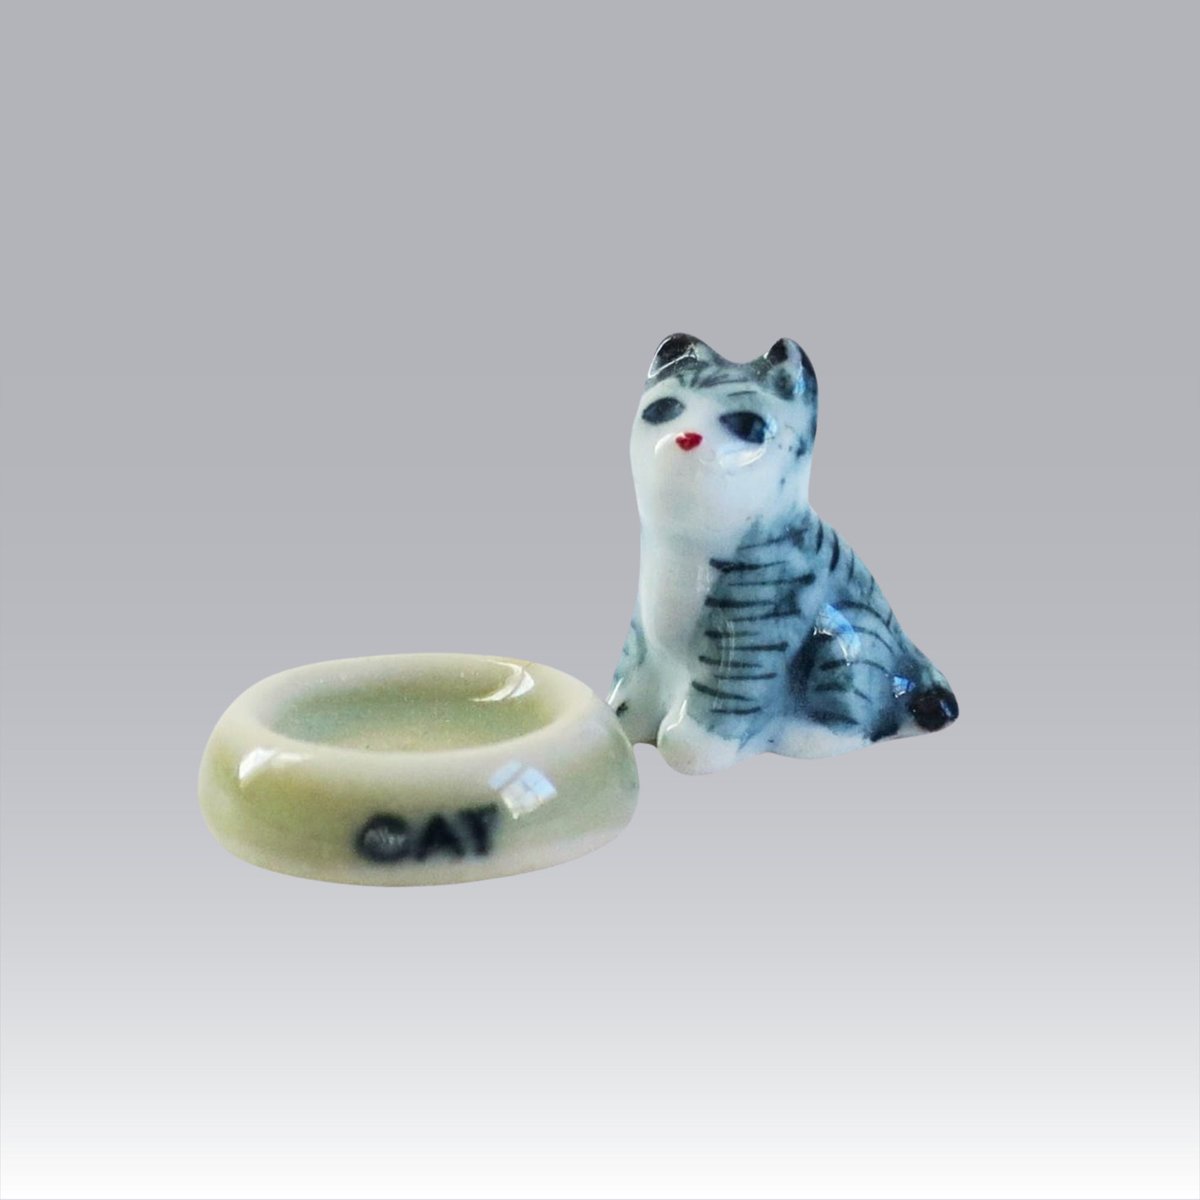 Micro 1:144 scale Gray Tabby Cat Figure with Bowl, Dollhouse Pet tuppu.net/2a91fe7c #SMILEtt23 #VintageFun #SwirlingOrange11 #Etsyteamunity